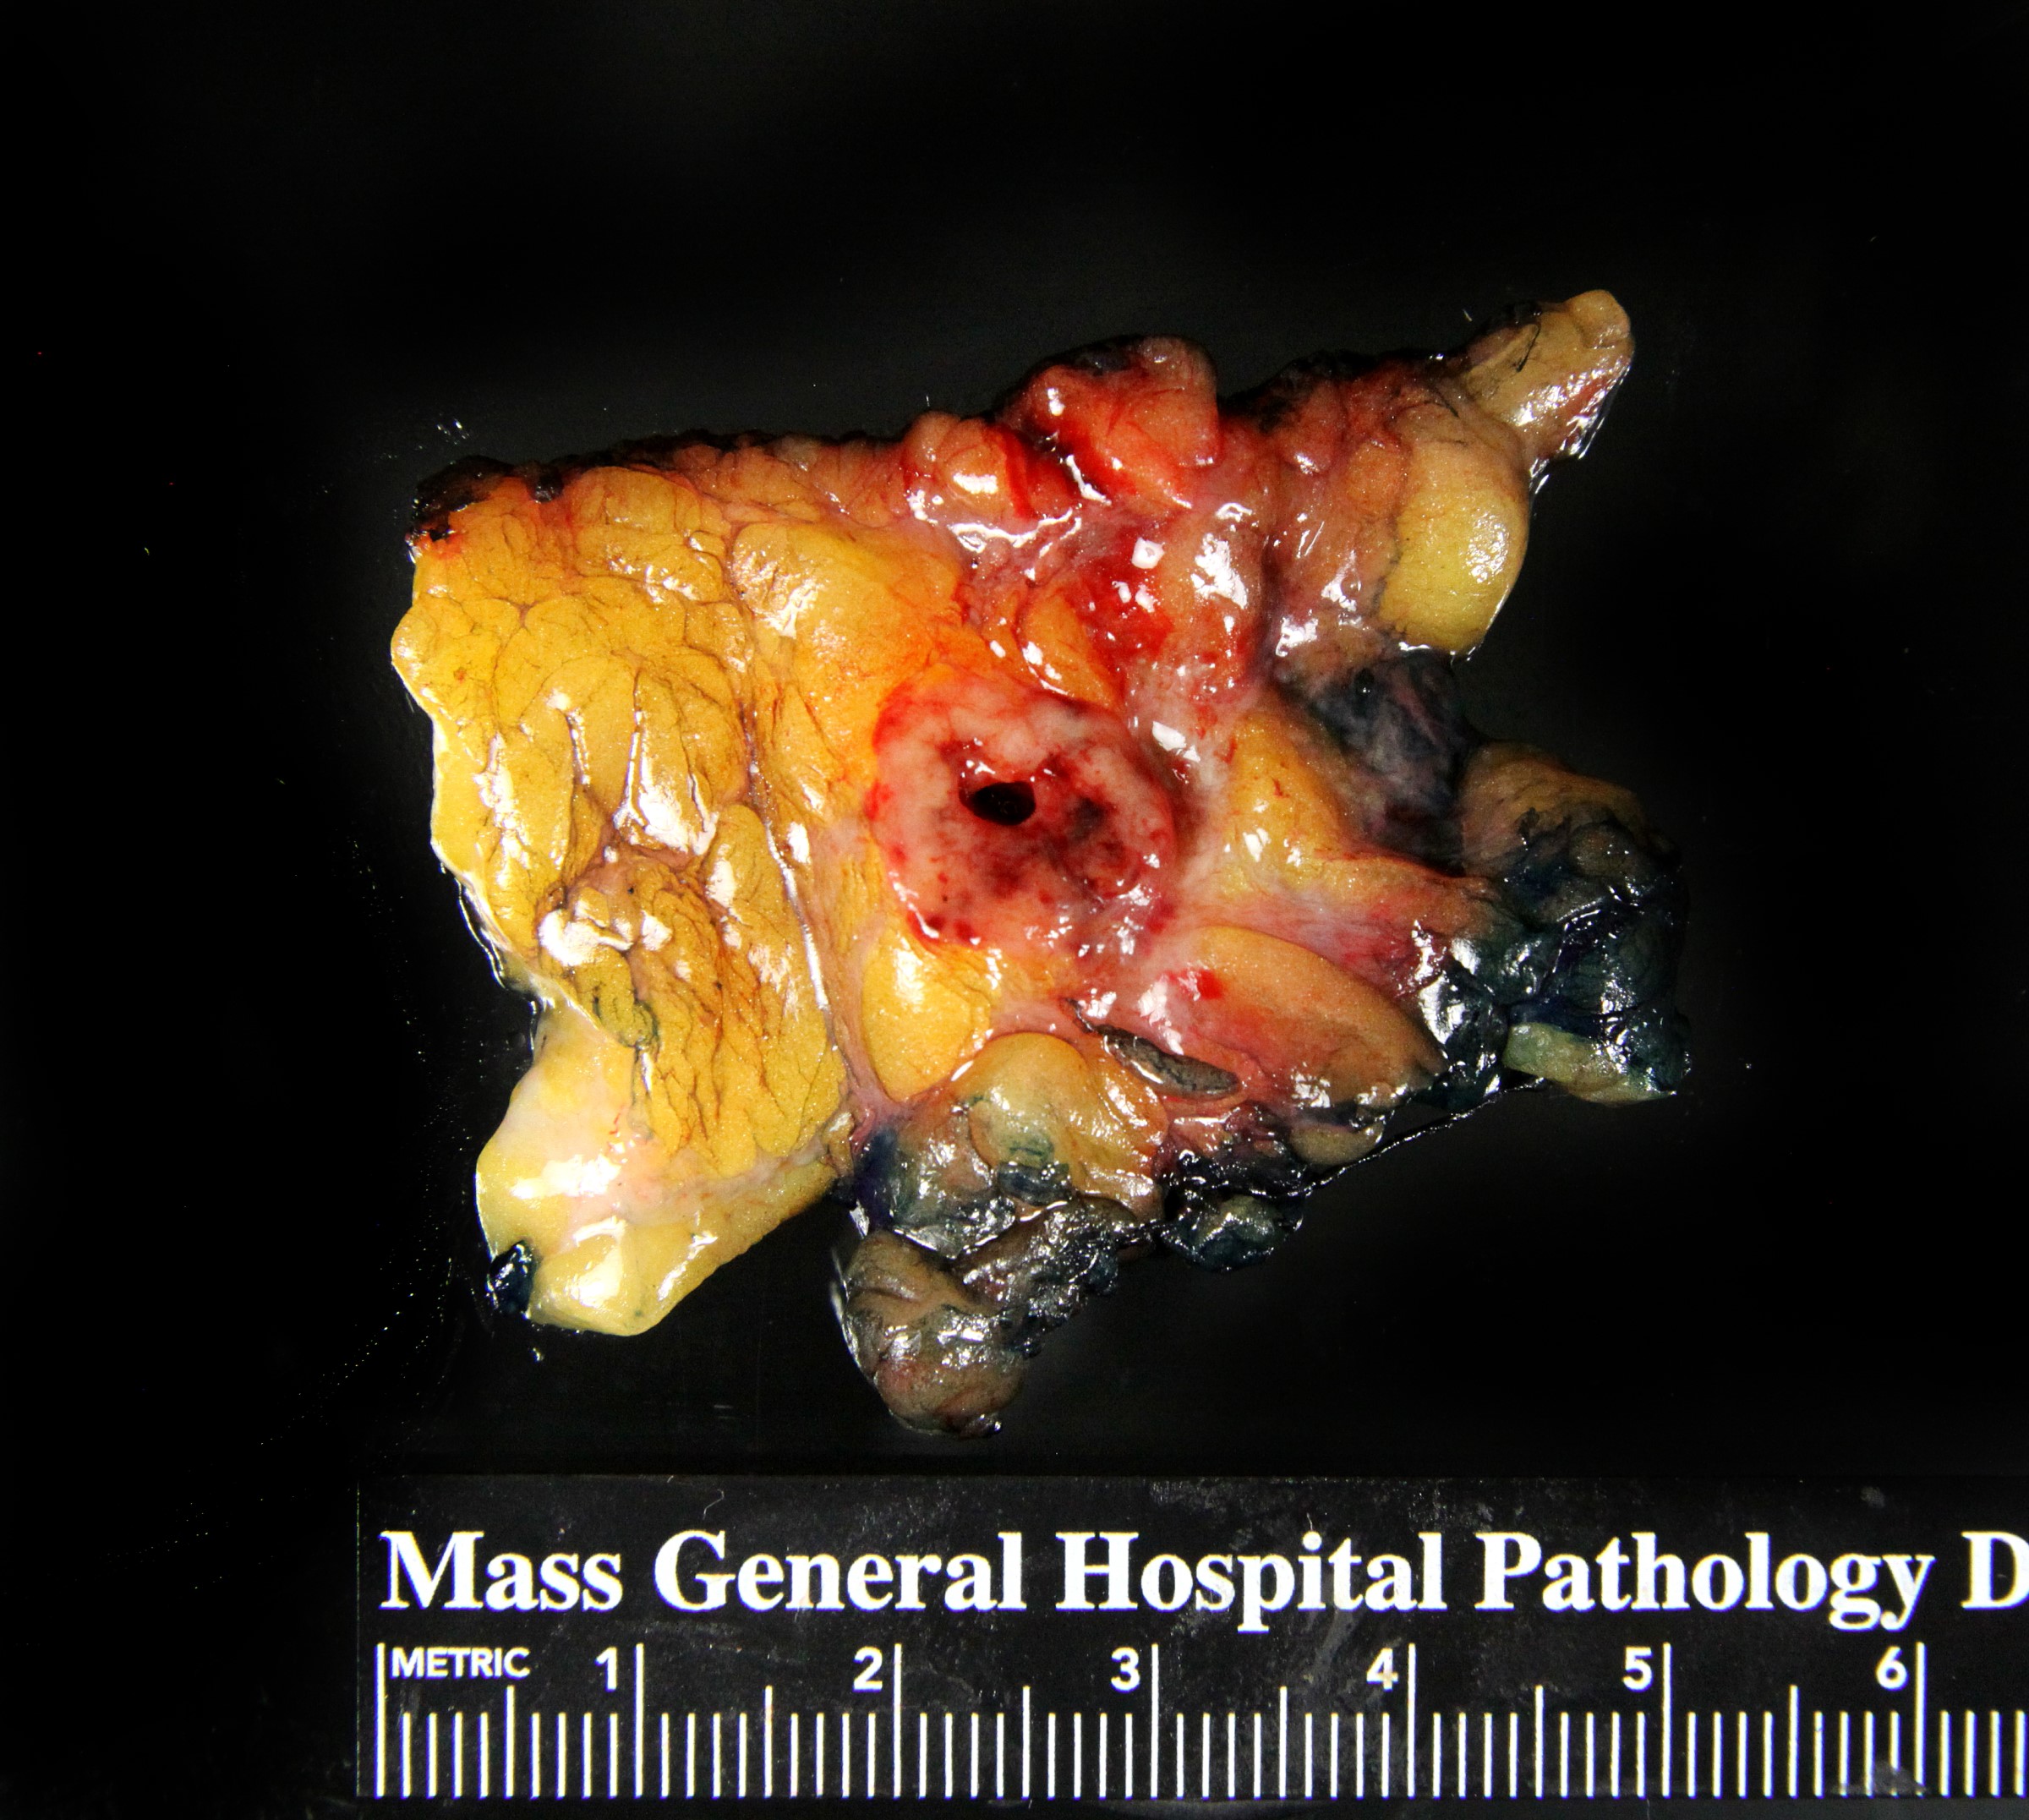 Invasive solid papillary carcinoma